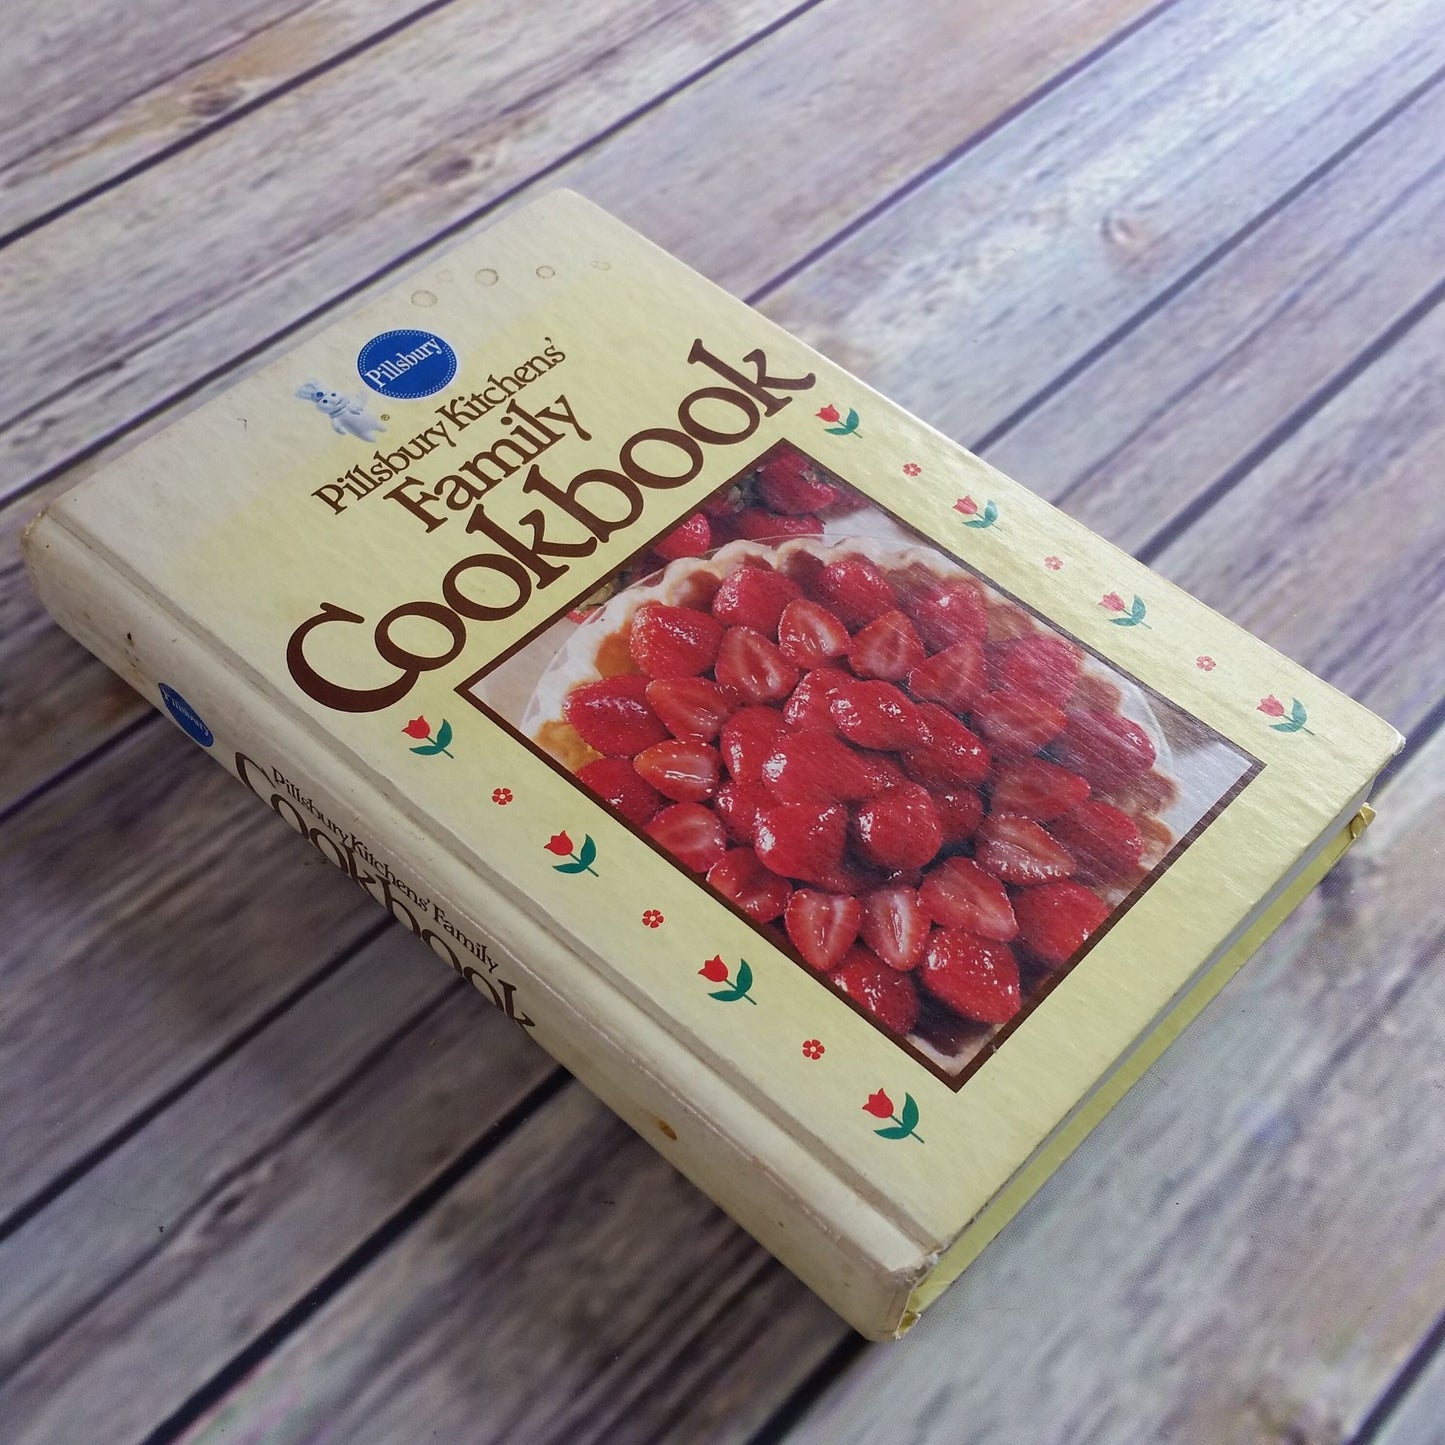 Vintage Cookbook Pillsbury Kitchens Family Cookbook Recipes 1987 Hardcover Book NO Dust Jacket